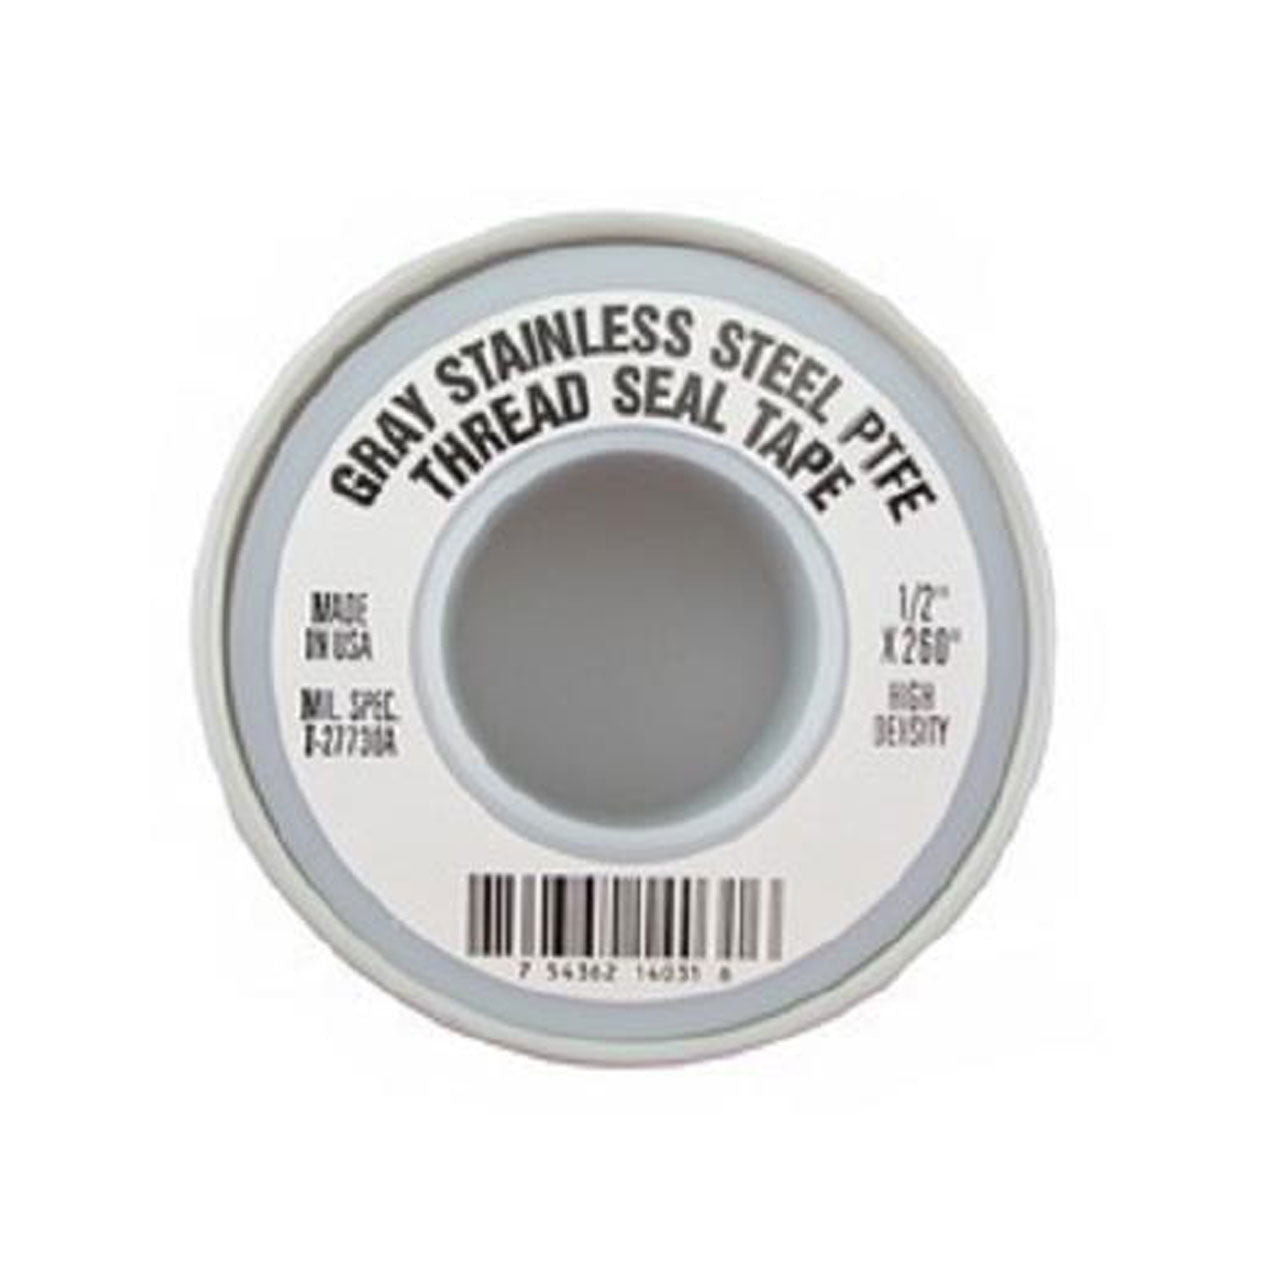 Threaded Seal Tape